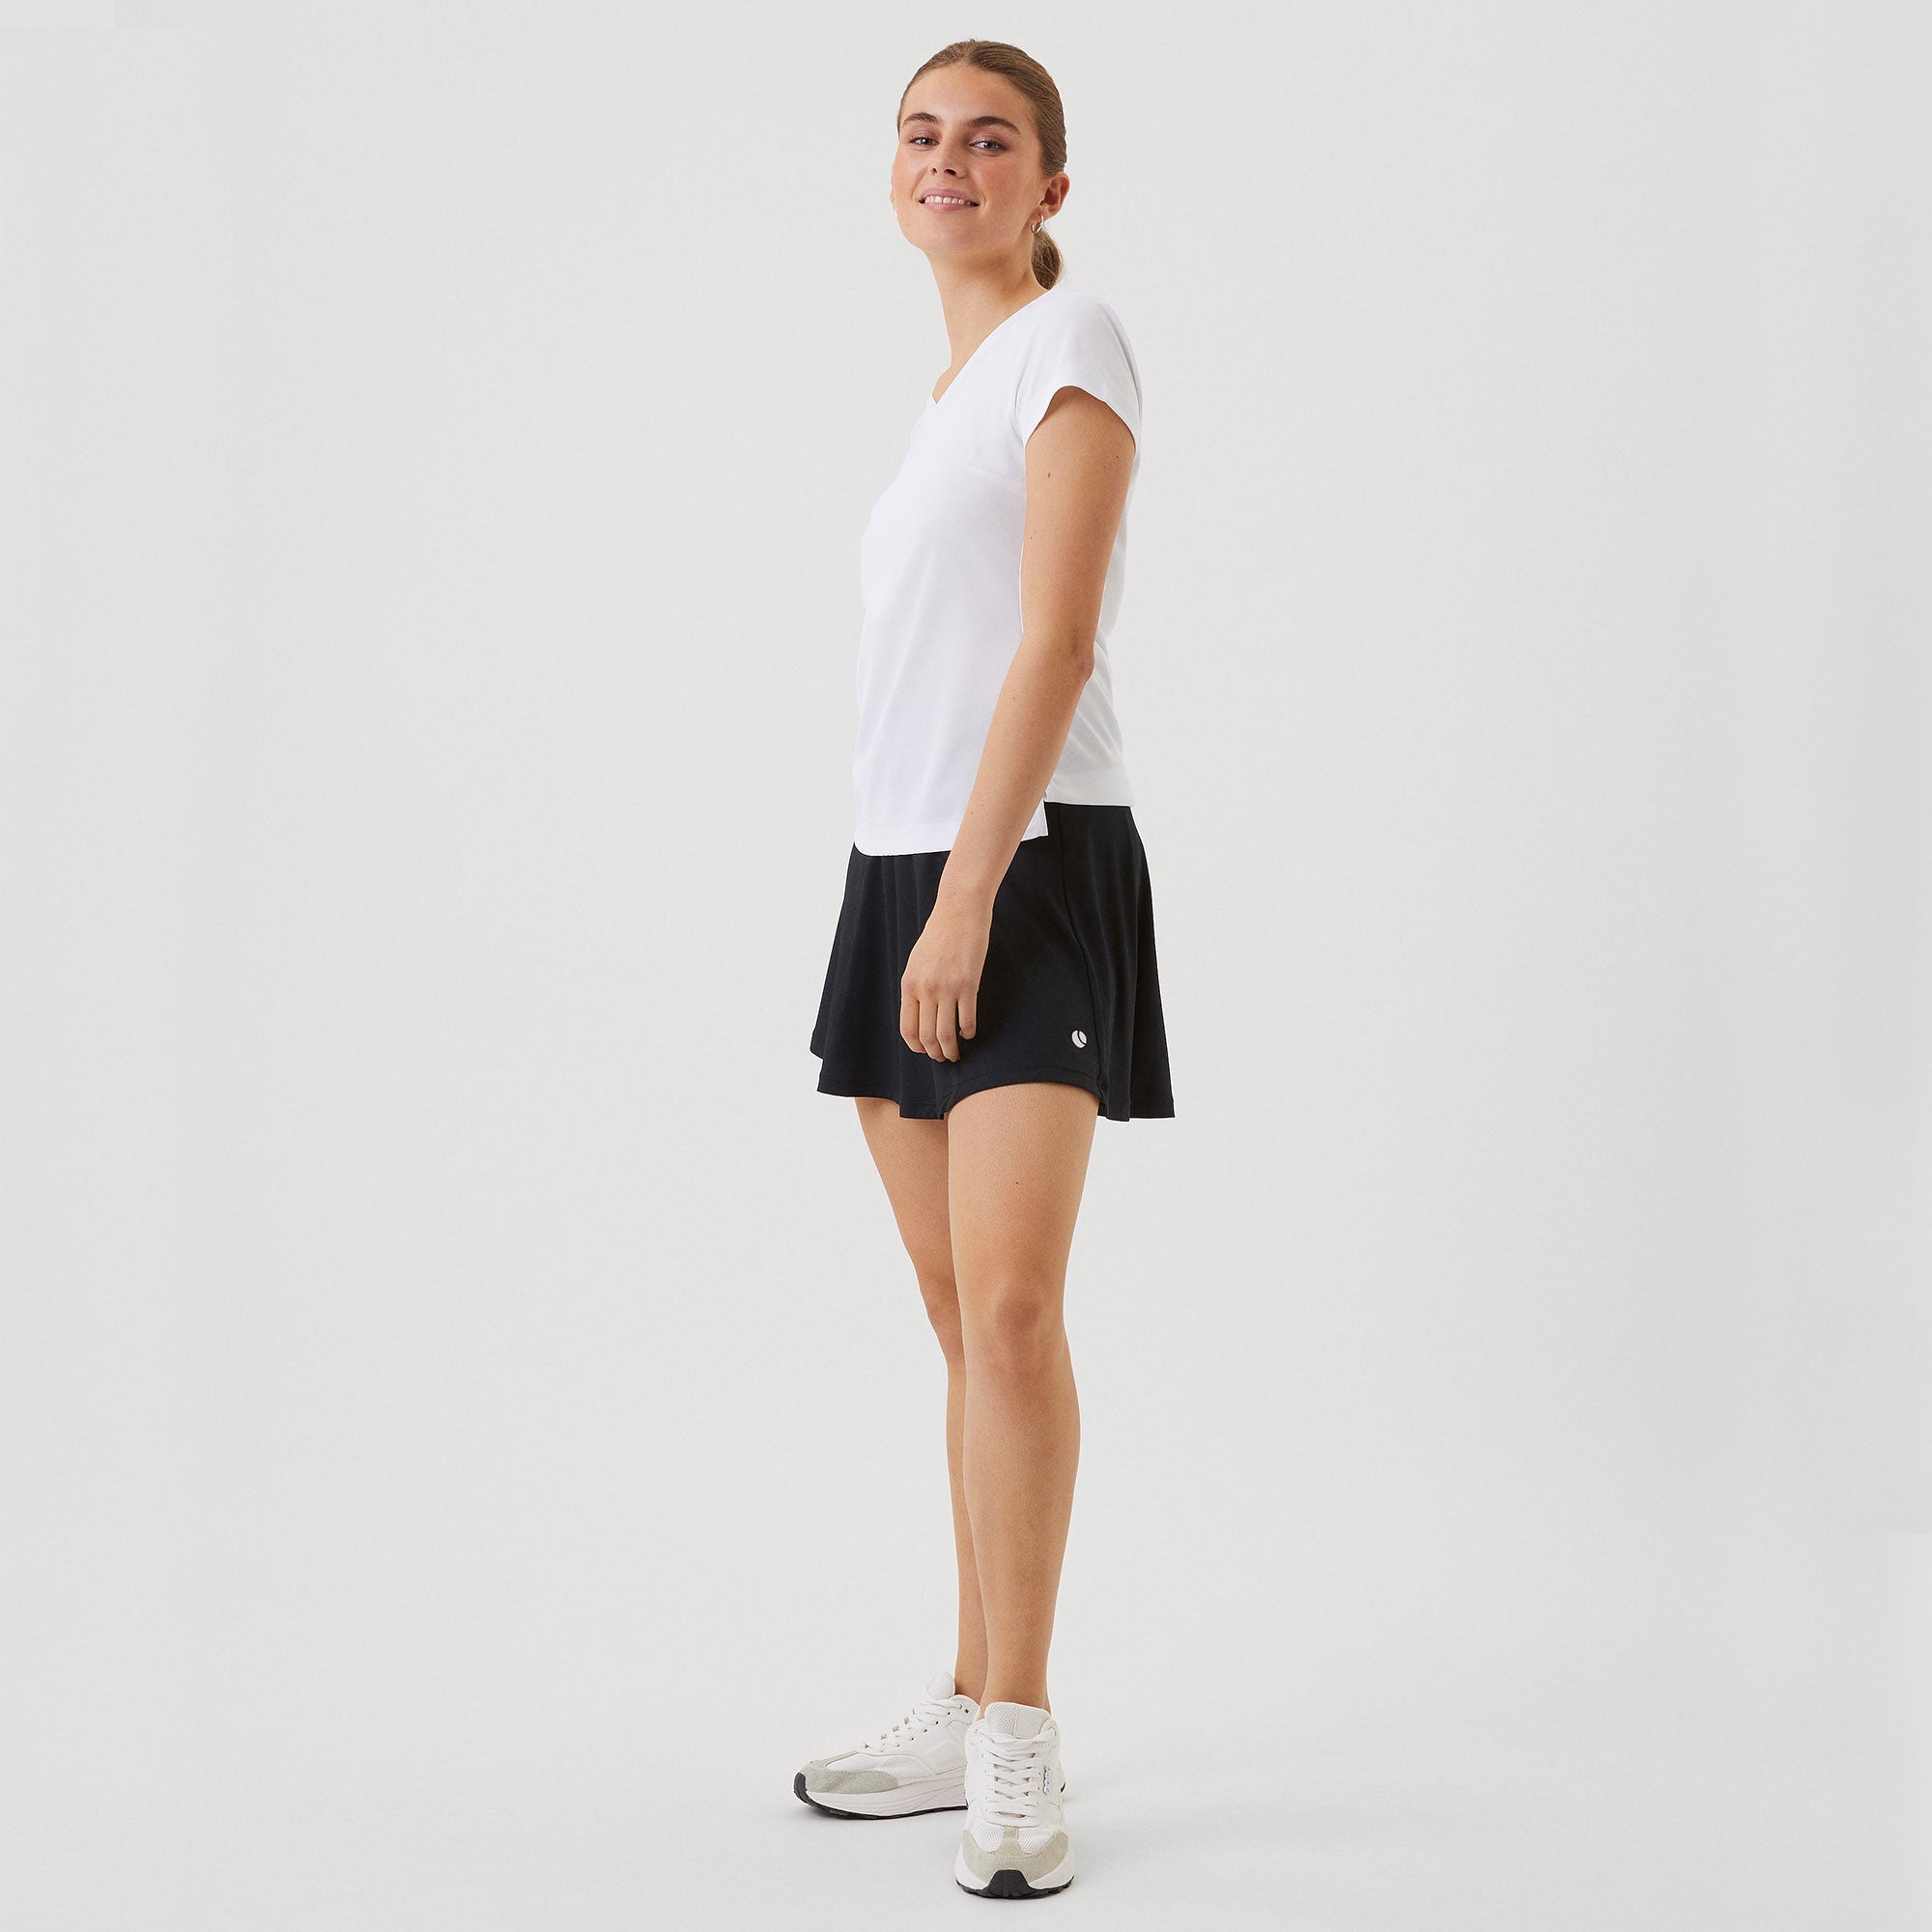 Björn Borg Ace Women's Tennis Shirt - White (3)